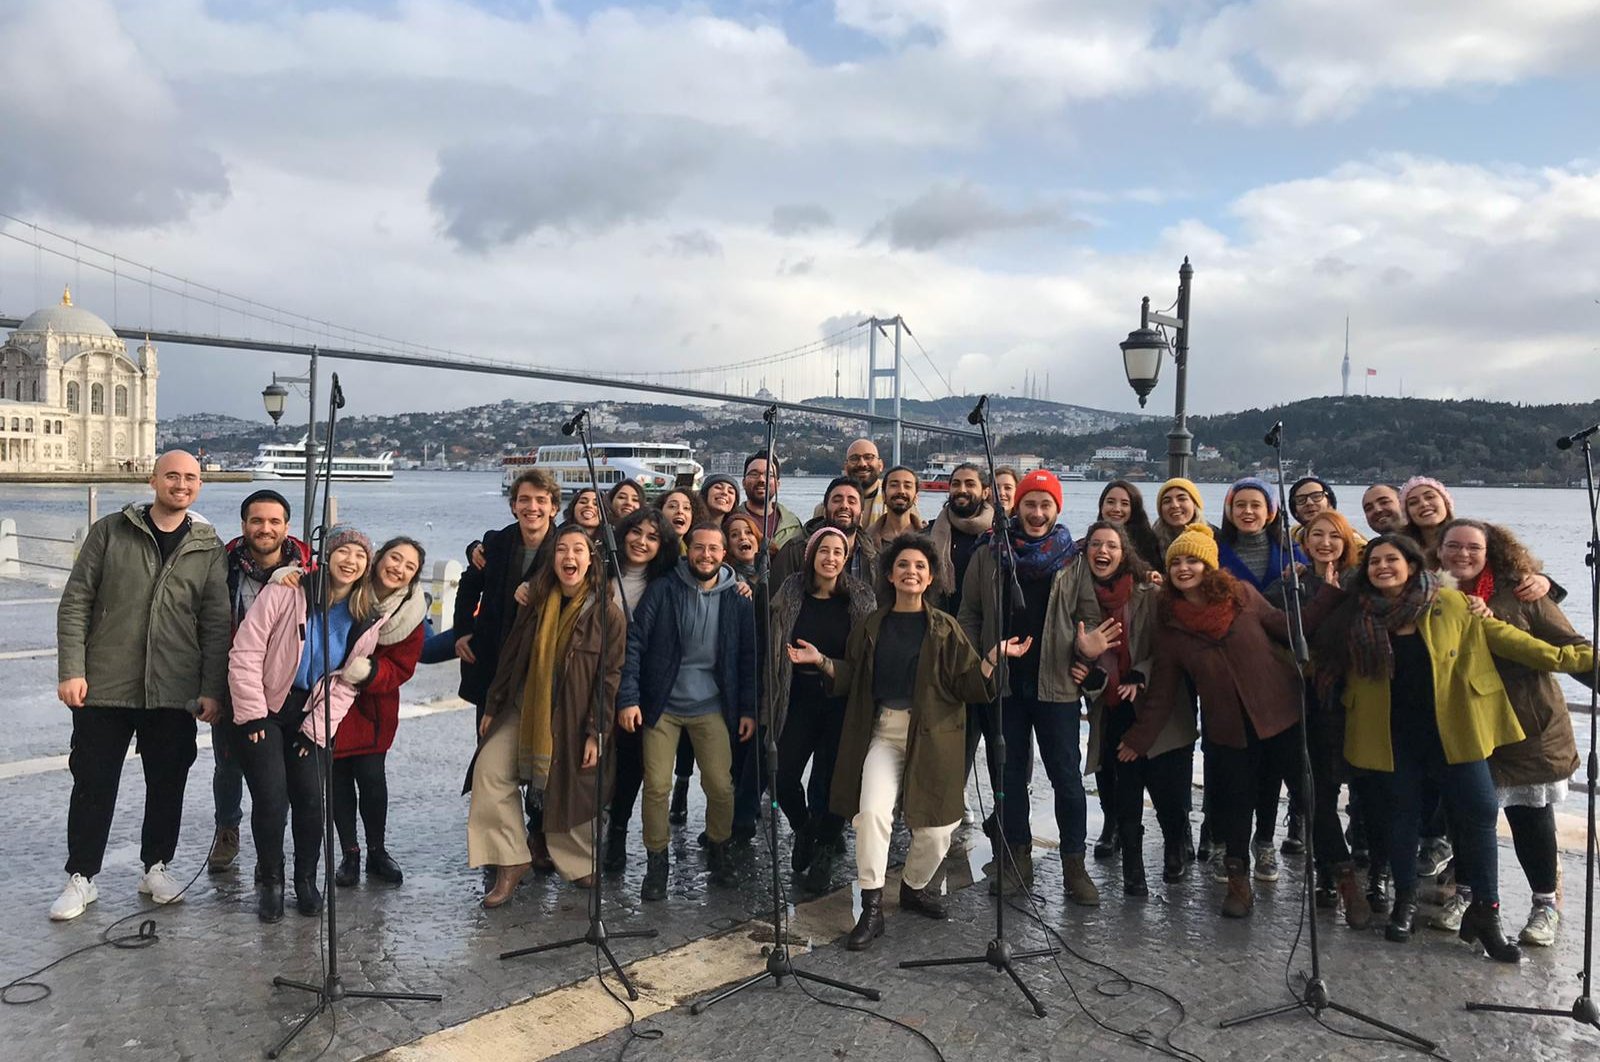 Chromas Choir performs near the Bosporus in a worldwide campaign against climate change, Istanbul, Turkey, Dec. 11, 2019. (Photo by Chromas Choir)